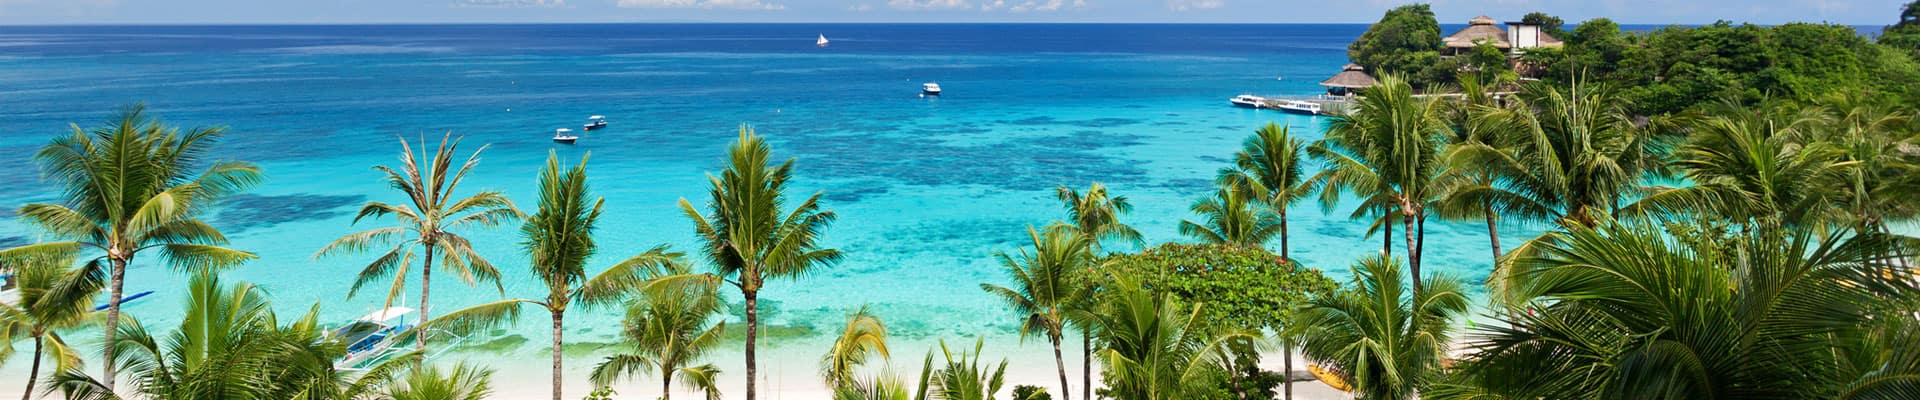 4 & 5 Day Miami to Bahamas Cruise Vacation | Norwegian Cruise Line